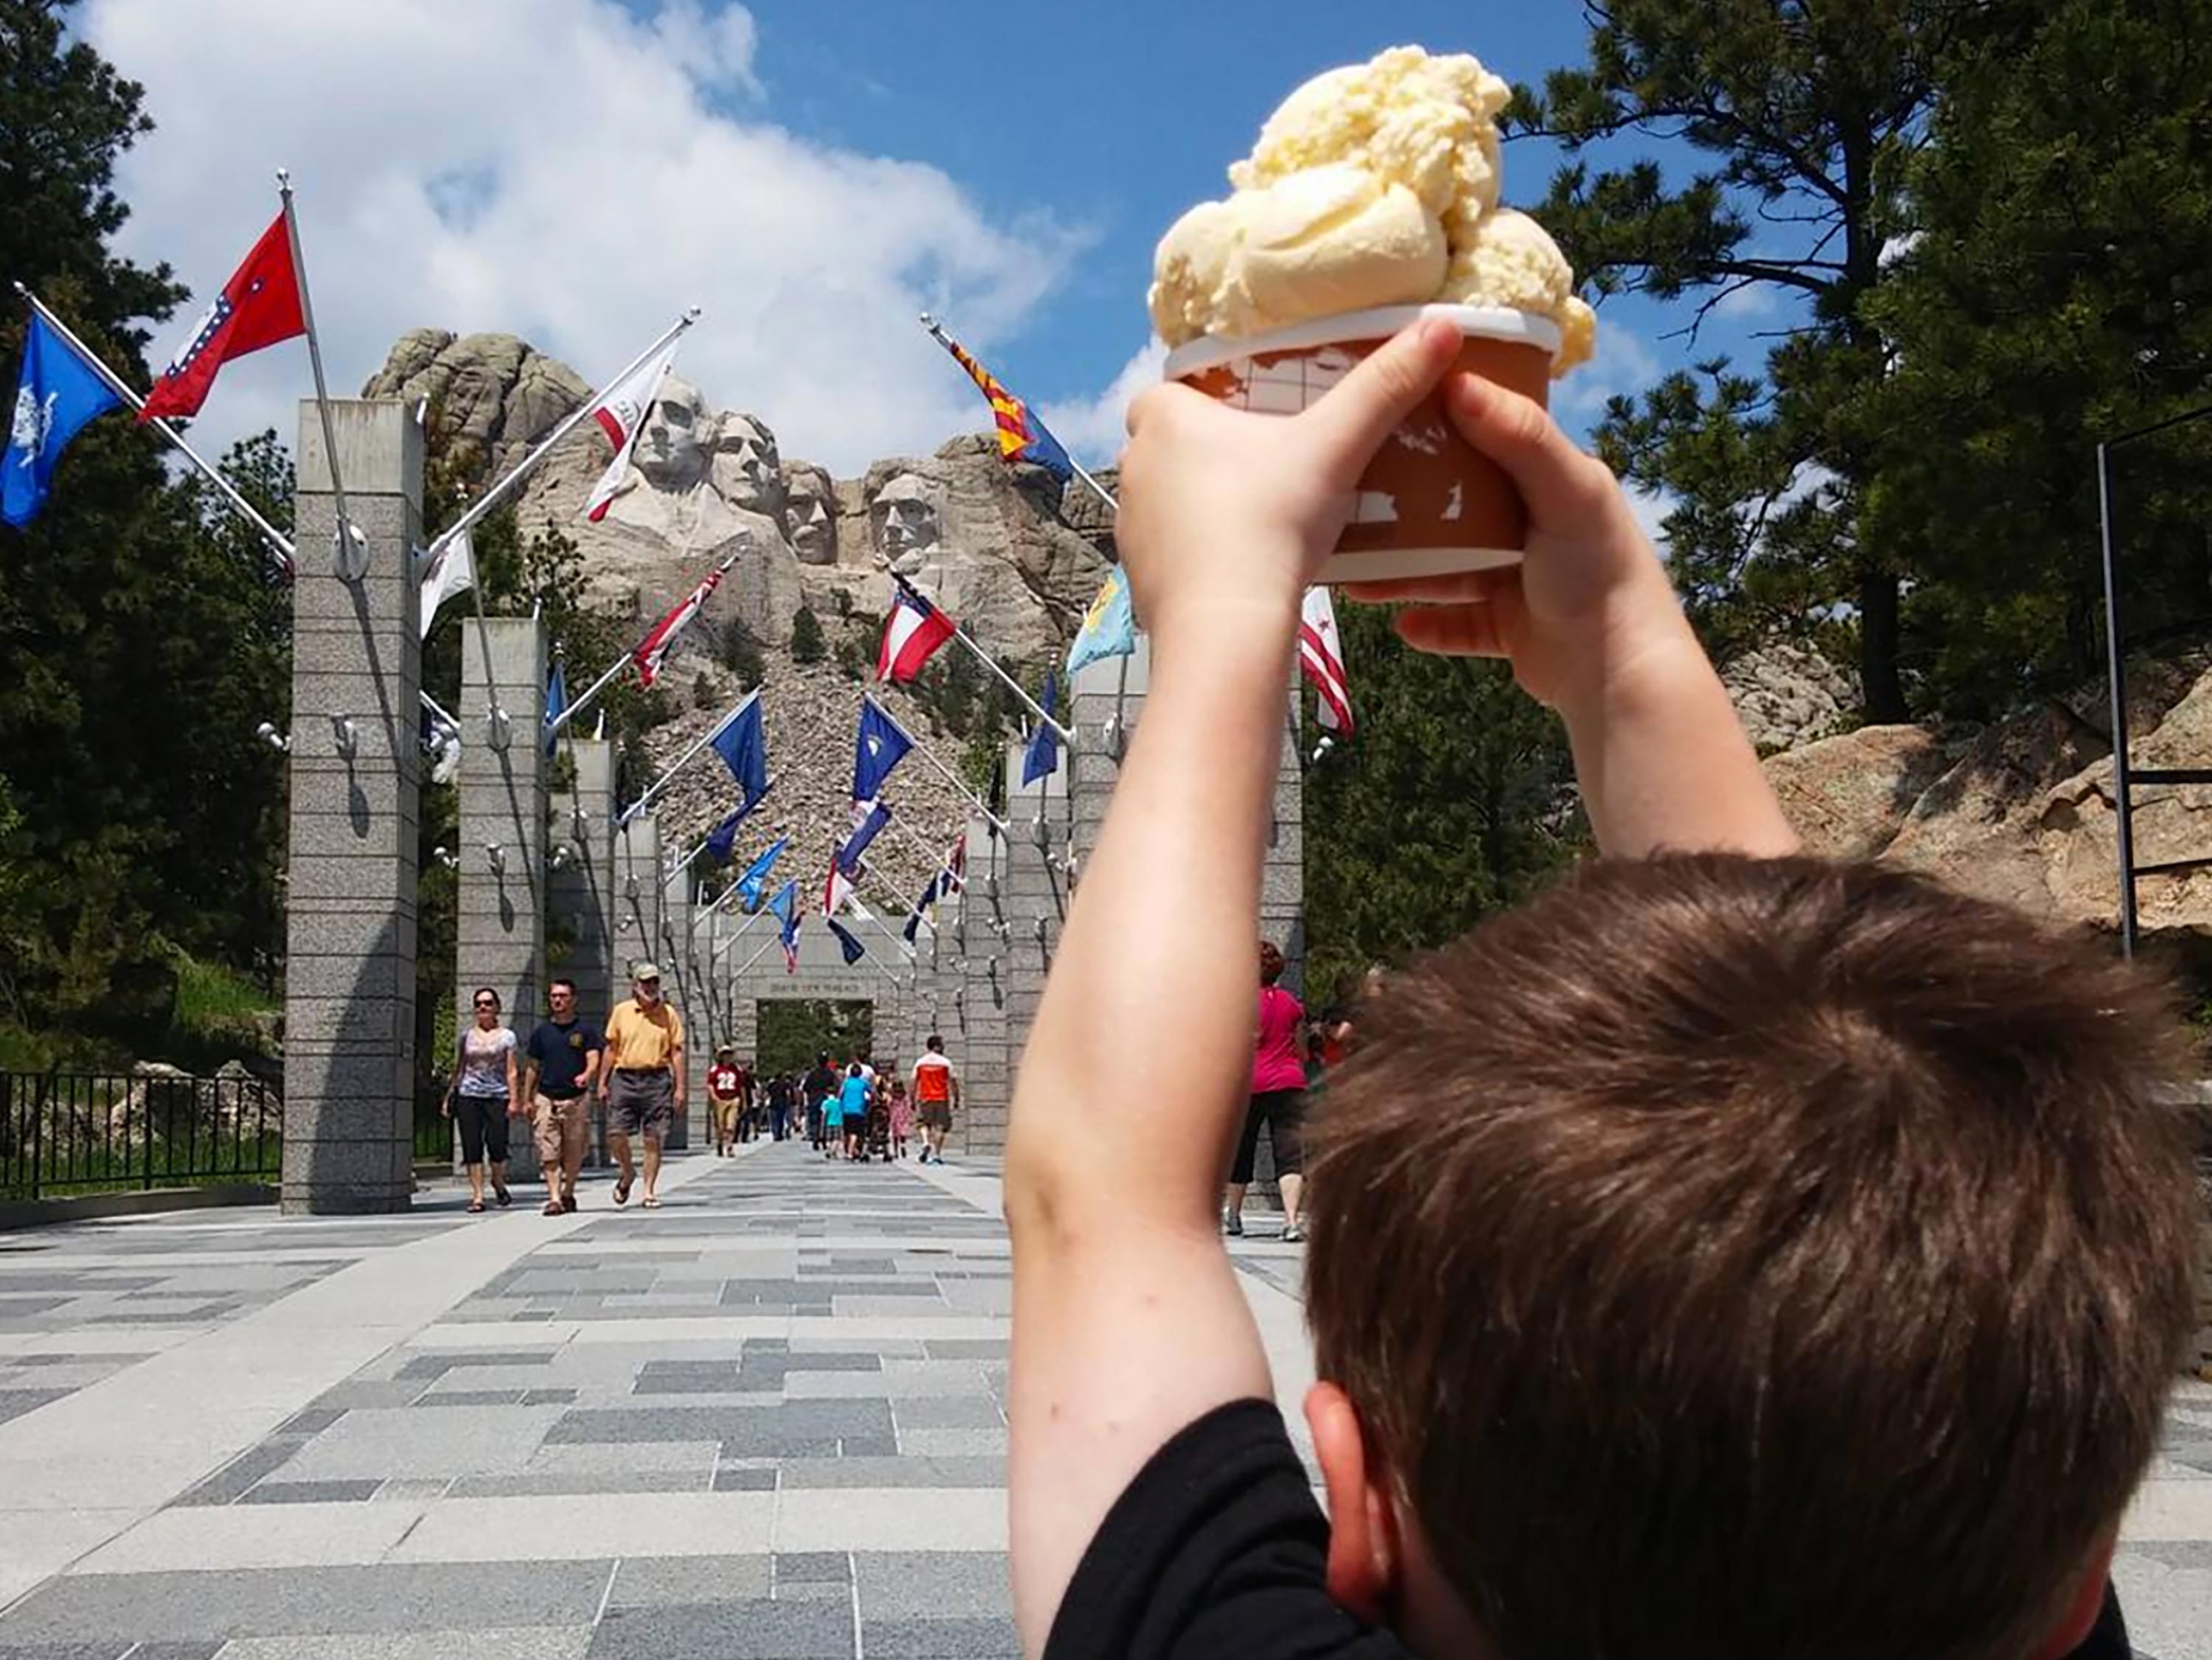 A kid enjoying TJ's Ice cream at Mount Rsuhmoore